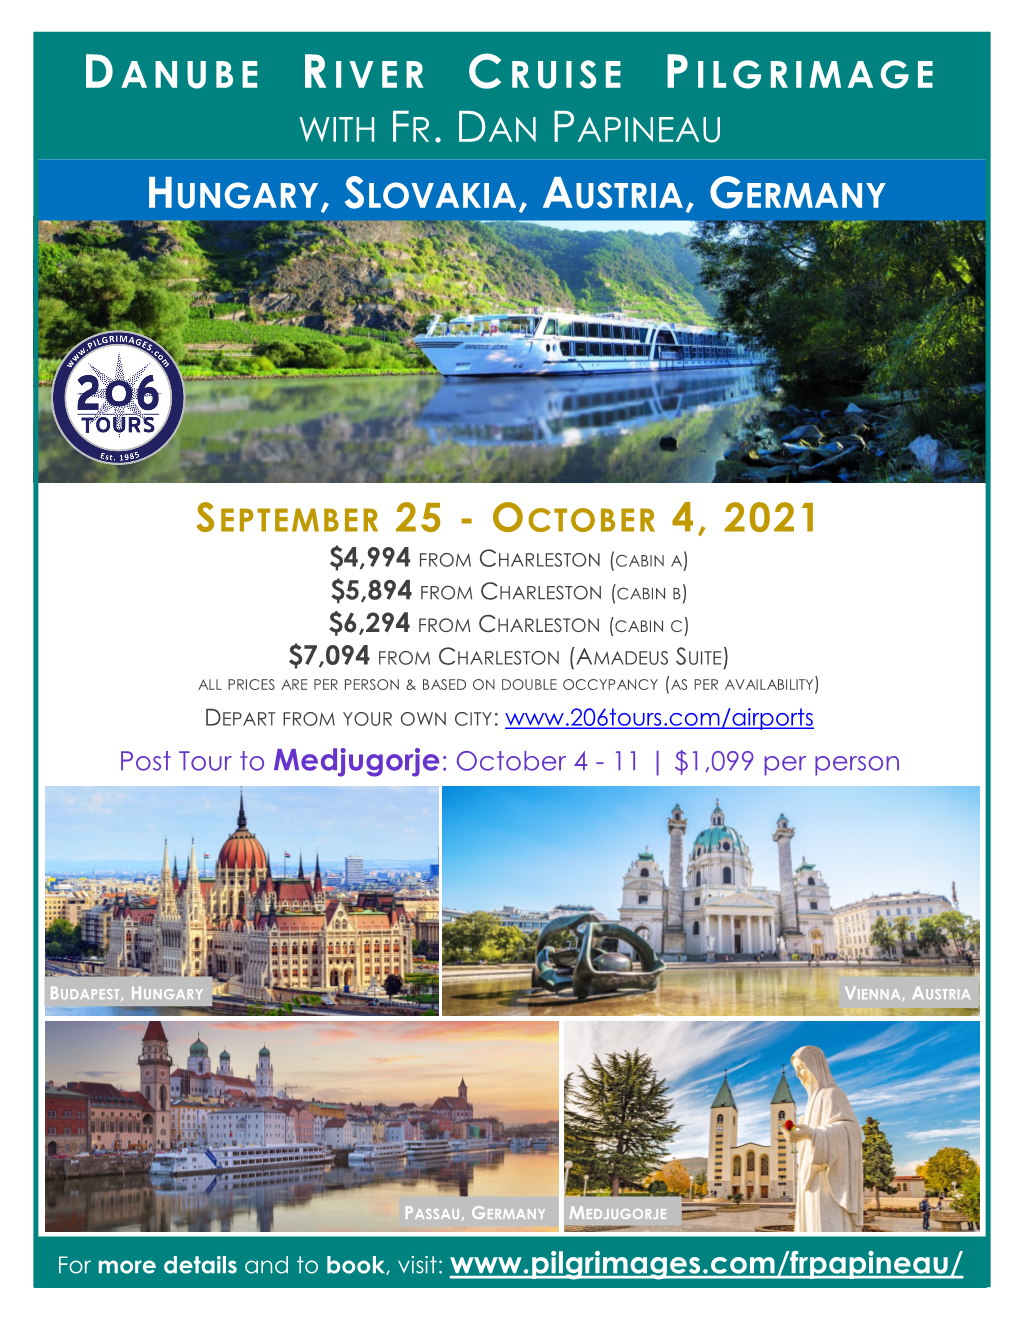 Danube River Cruise Pilgrimage